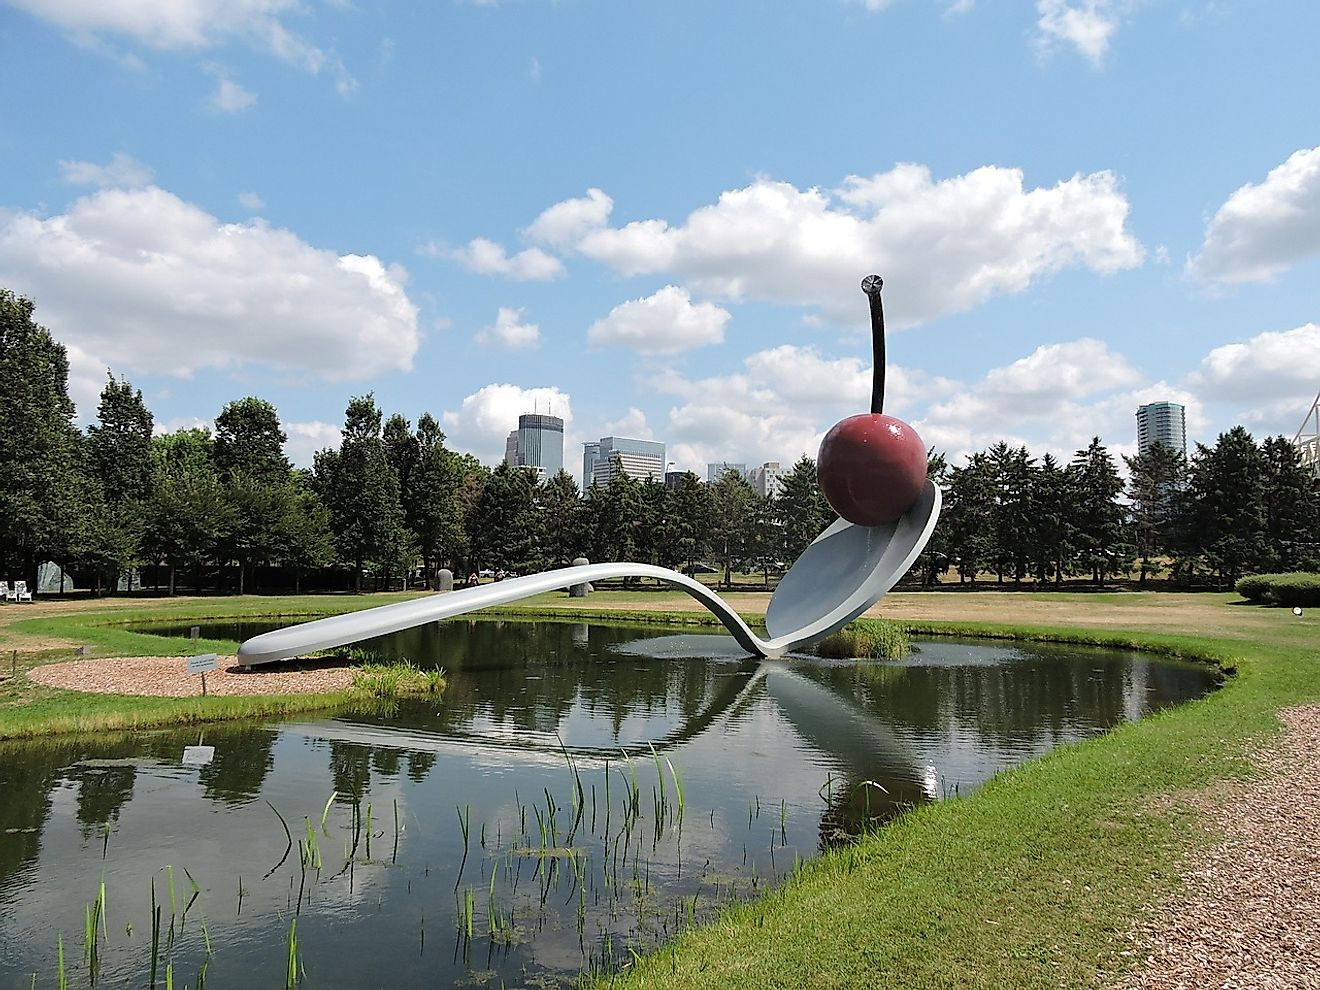 Minneapolis’ iconic Spoonbridge and Cherry sculpture. Image credit: Vladey Meer from Pixabay